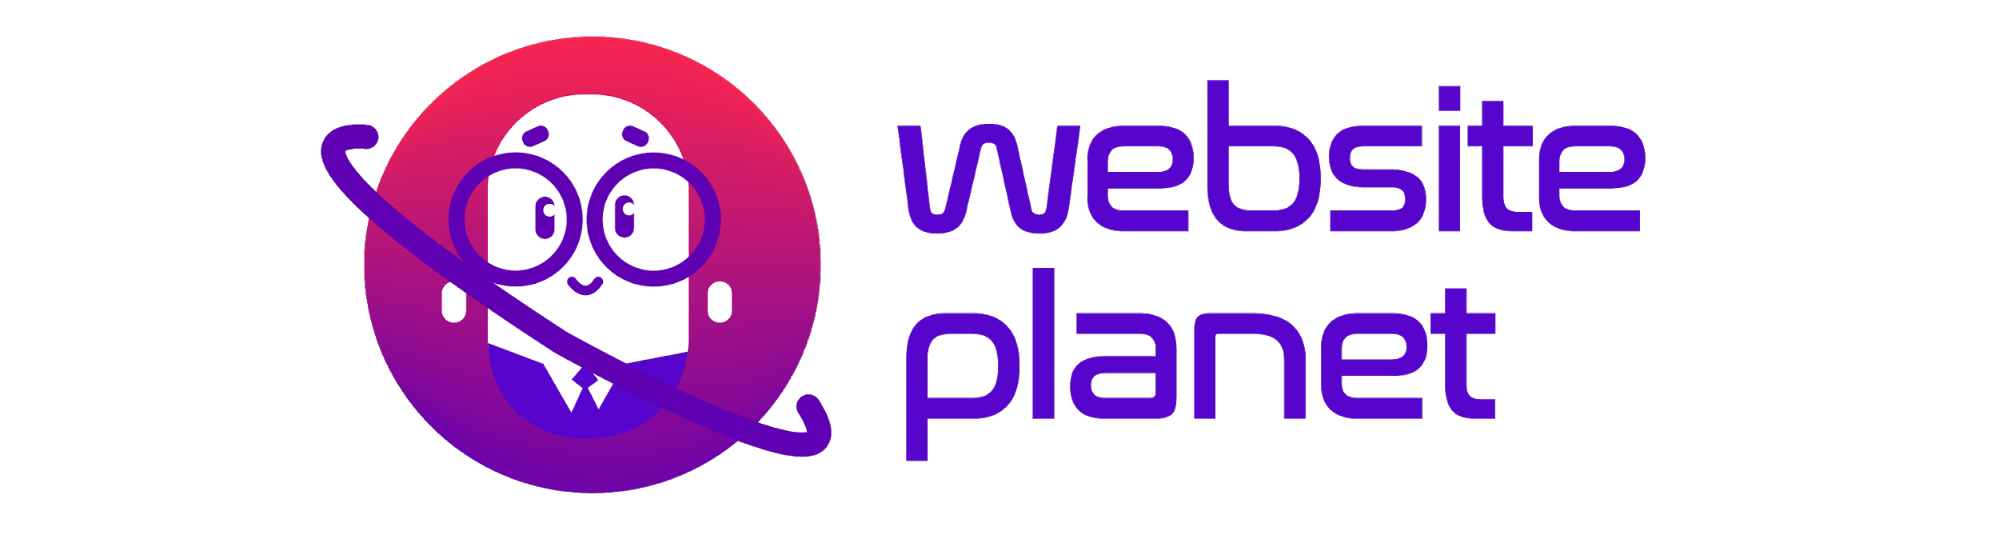 Website Planet logo from Fiverr - $40